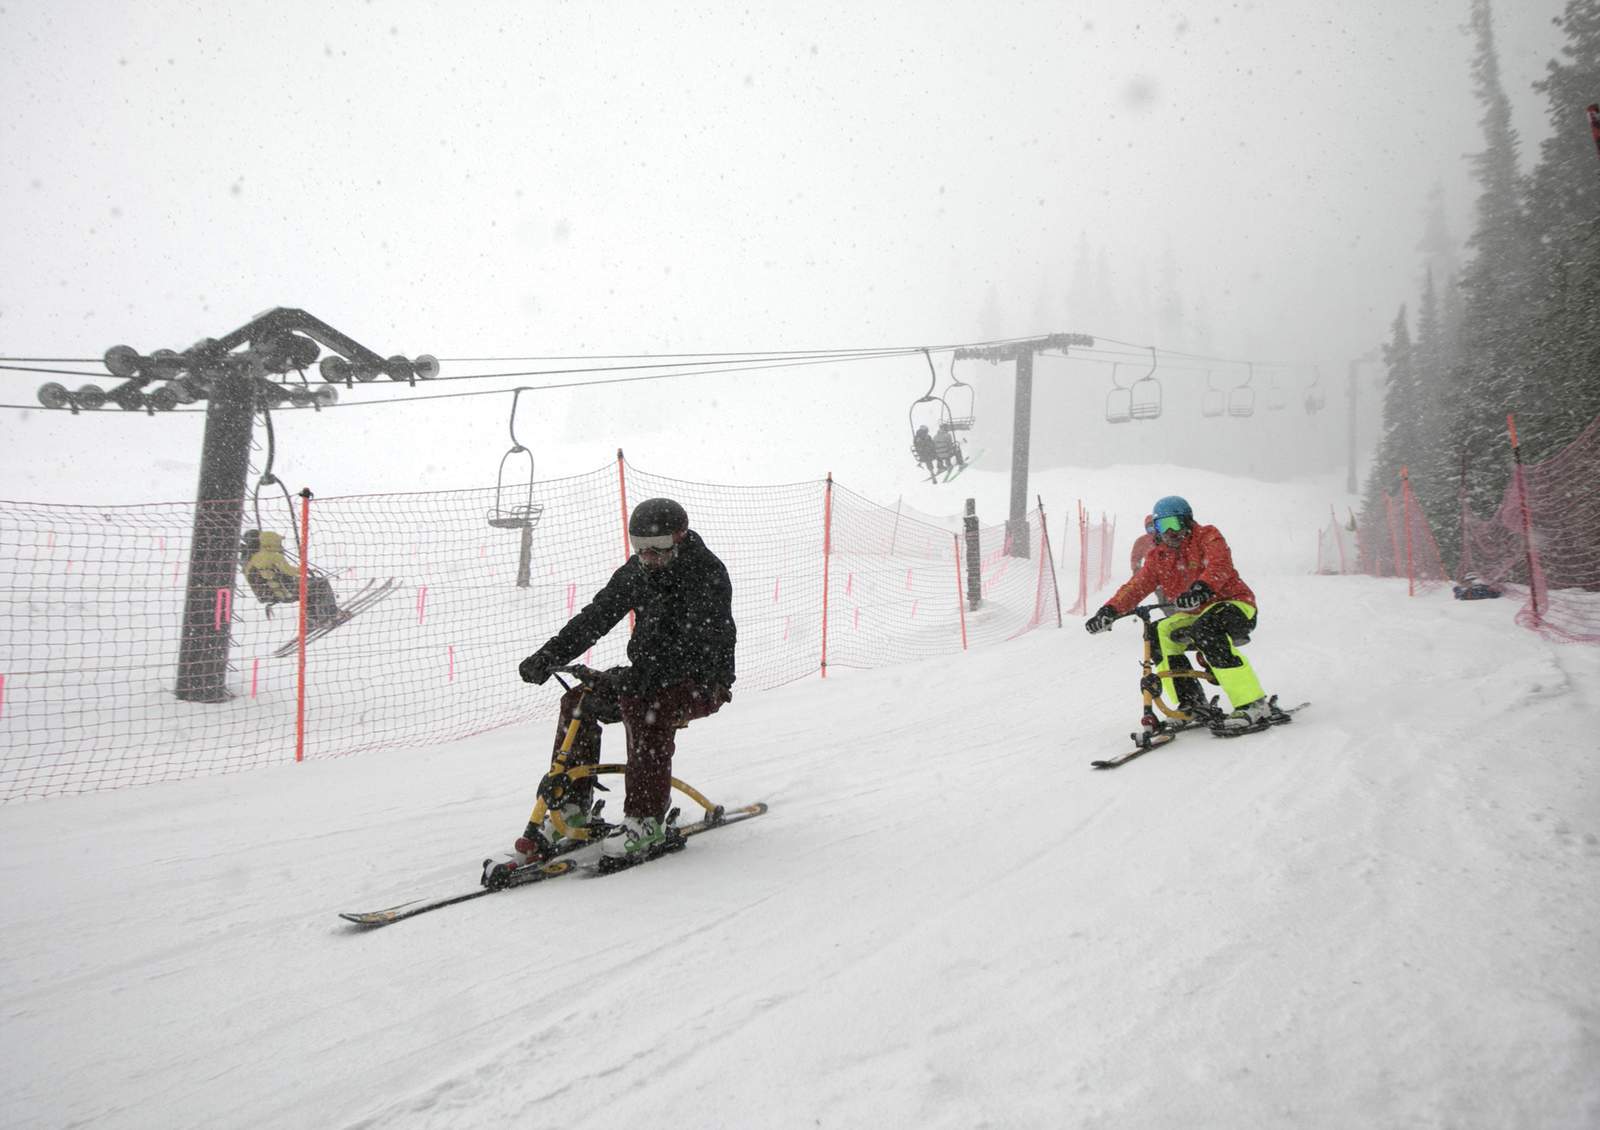 Skiing in Colorado to resume amid coronavirus pandemic